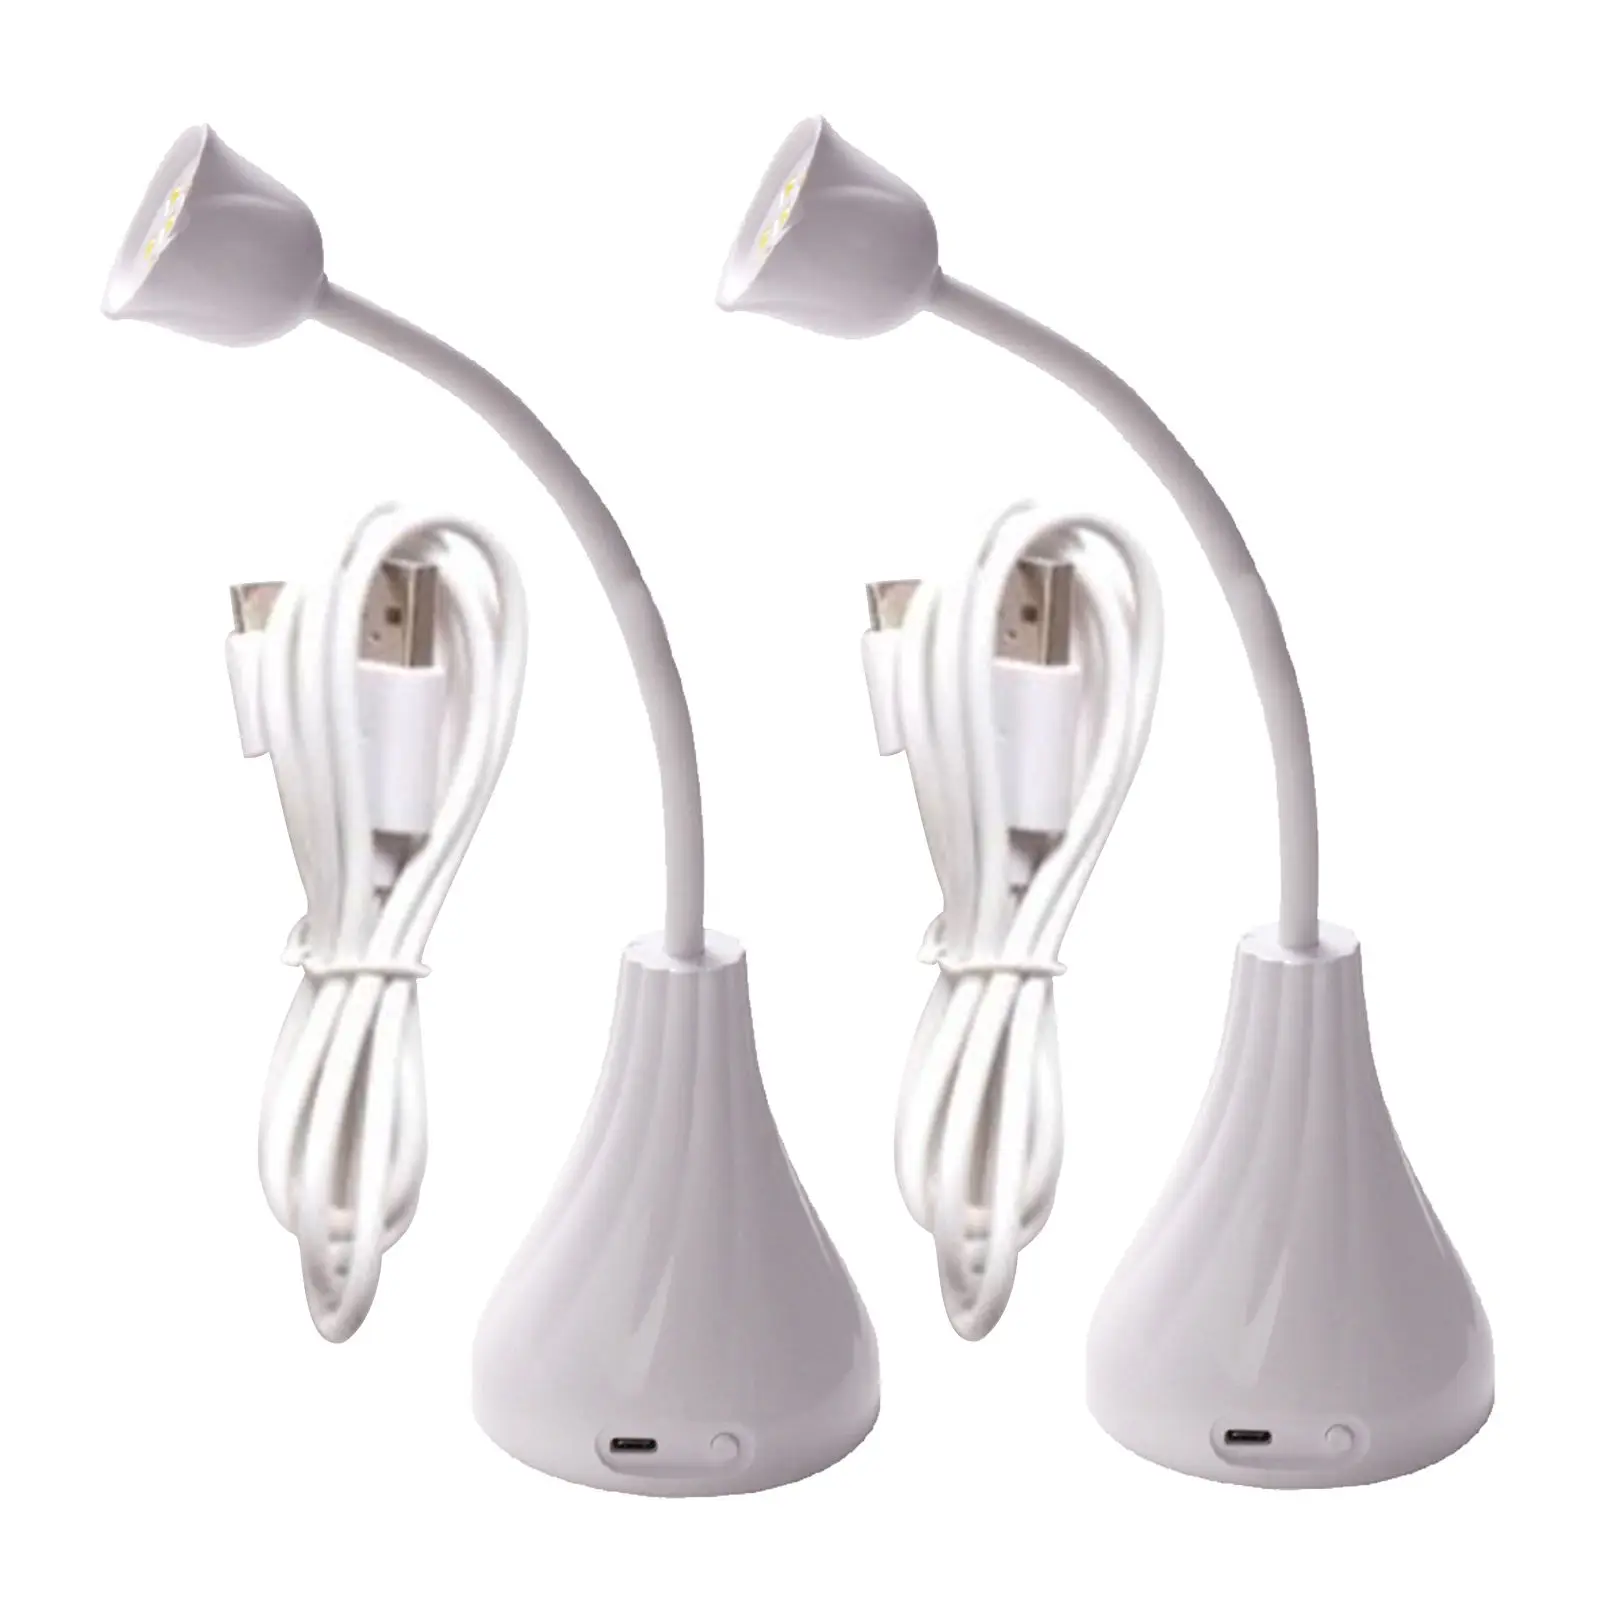 LED Nail Lamp, Professional Nail Dryer for Gel Polish Fits Fingernail Toenail, Nail Light Gel Lamp for Home and Salon Use